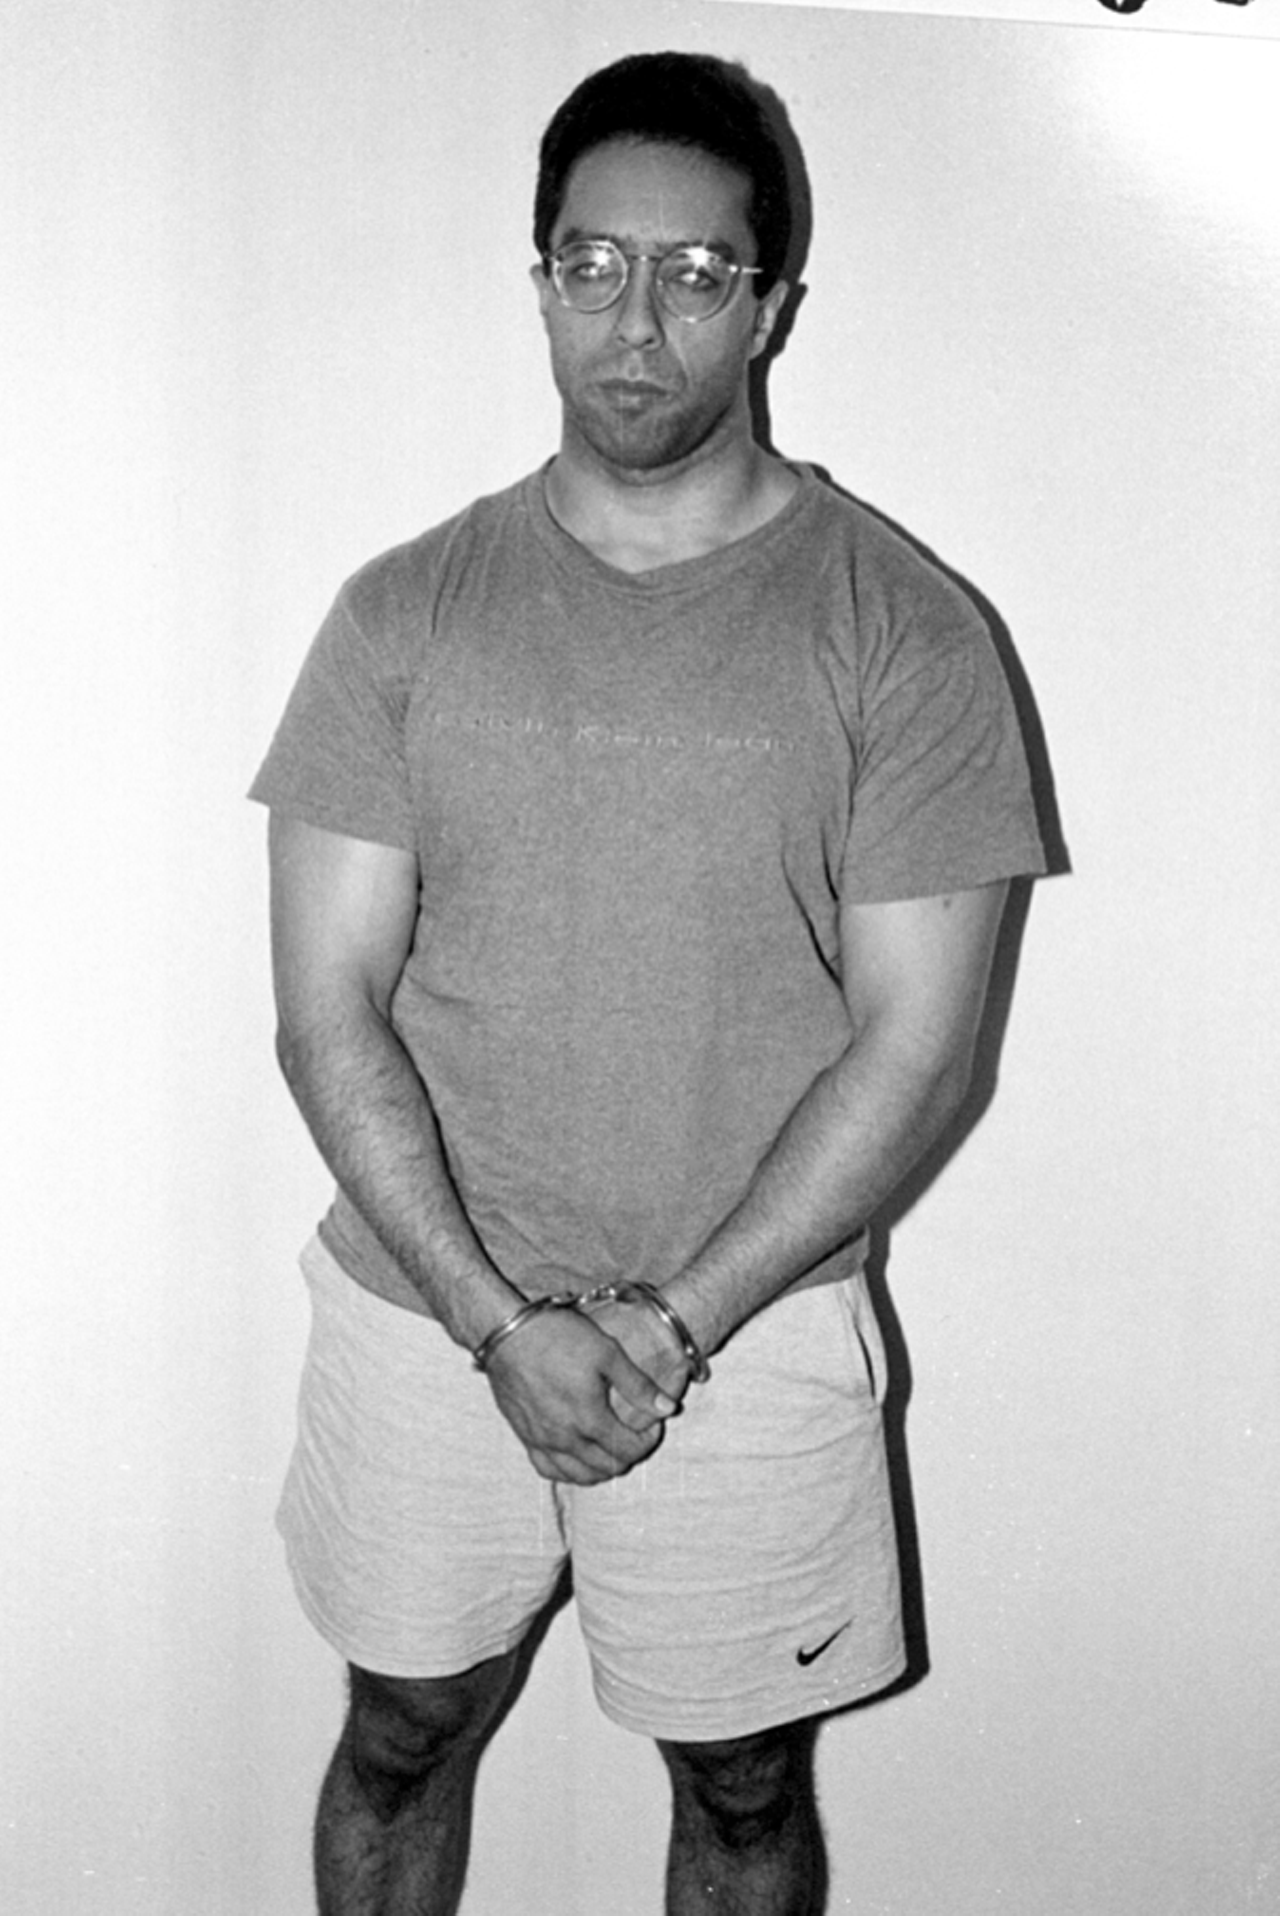 Daniel Lugo in handcuffs. Mark Wahlberg plays Lugo in the movie.